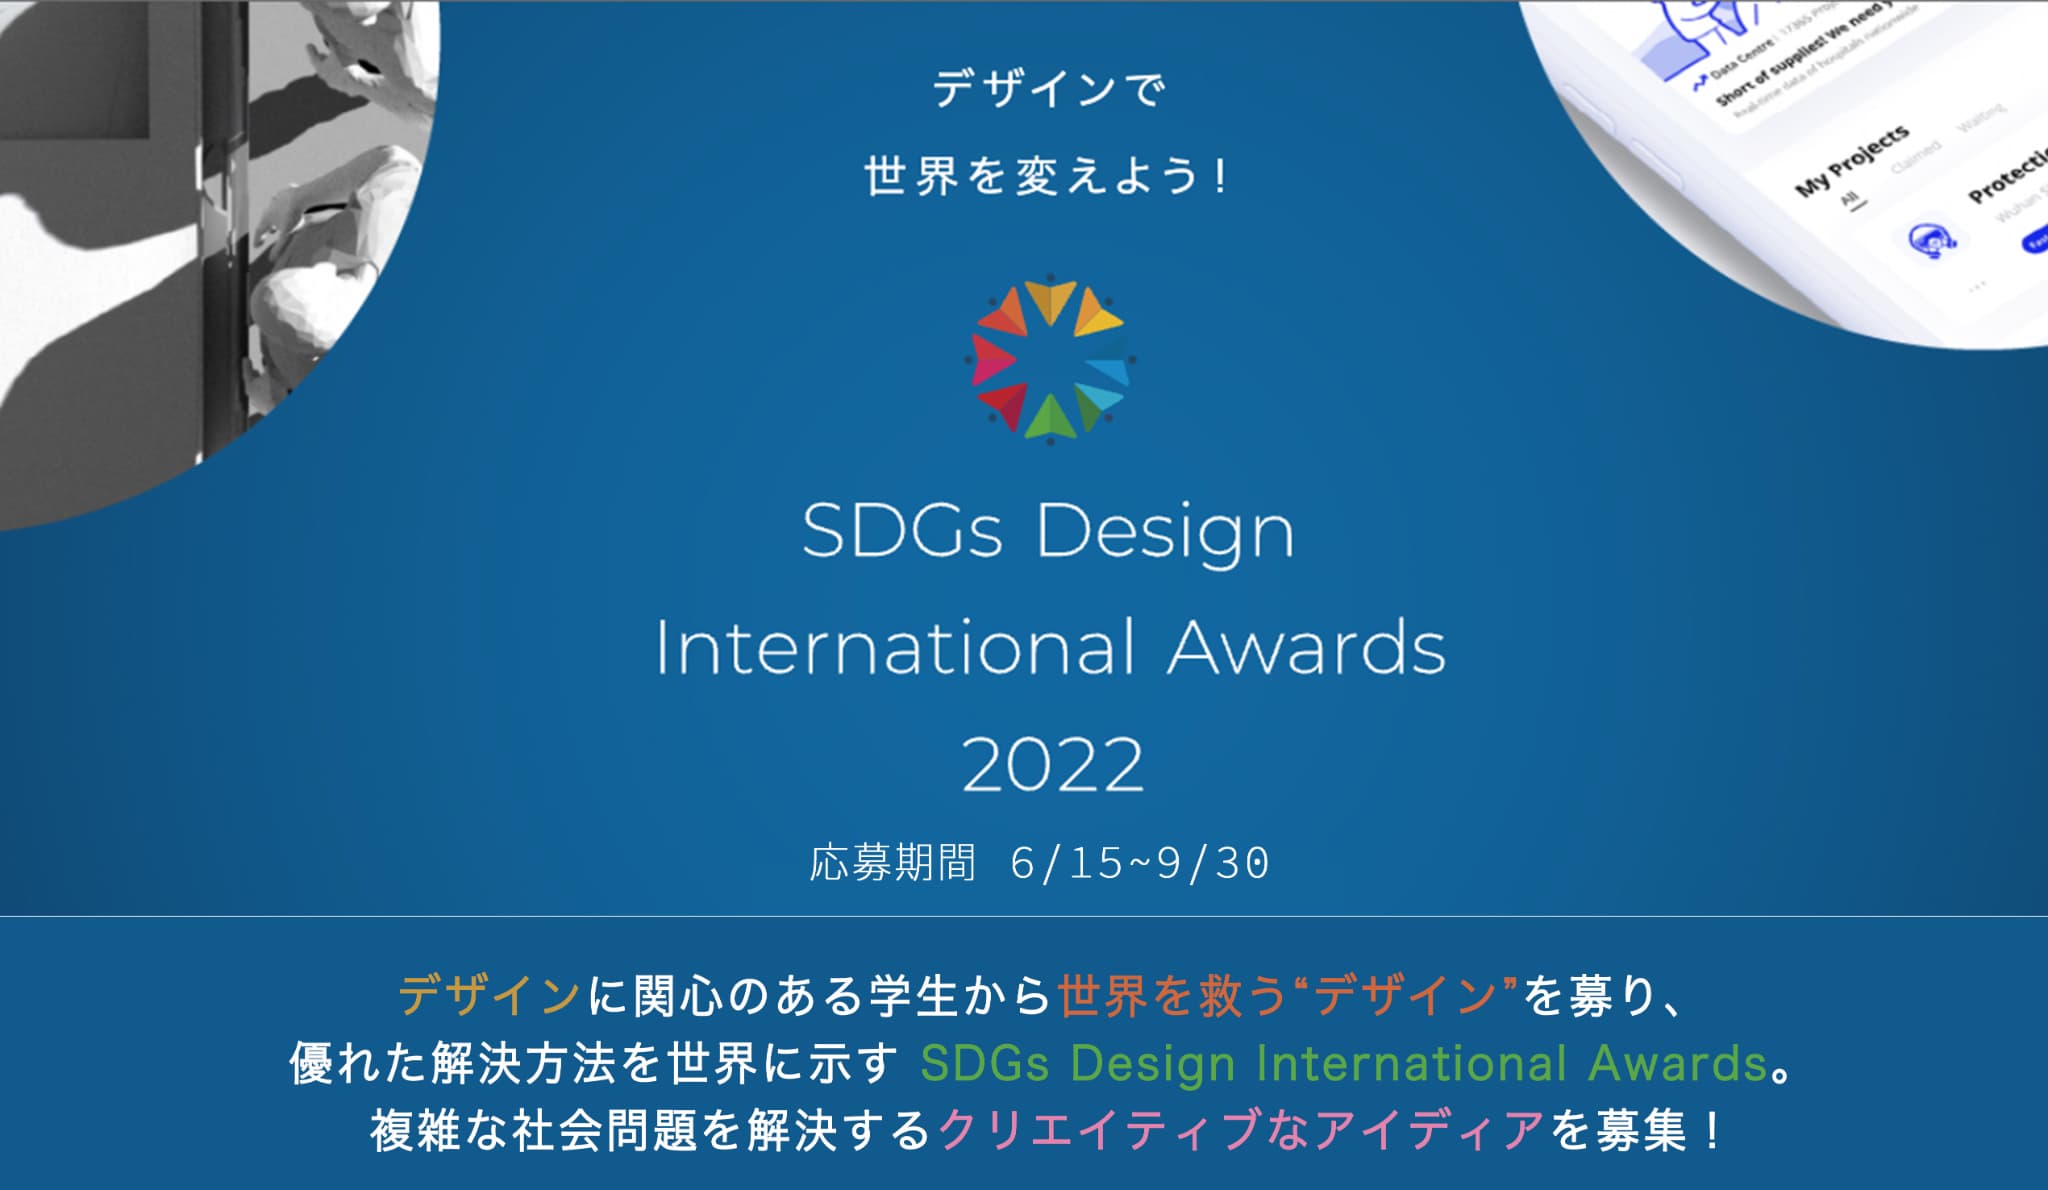 SDGs Design International Awards 2022